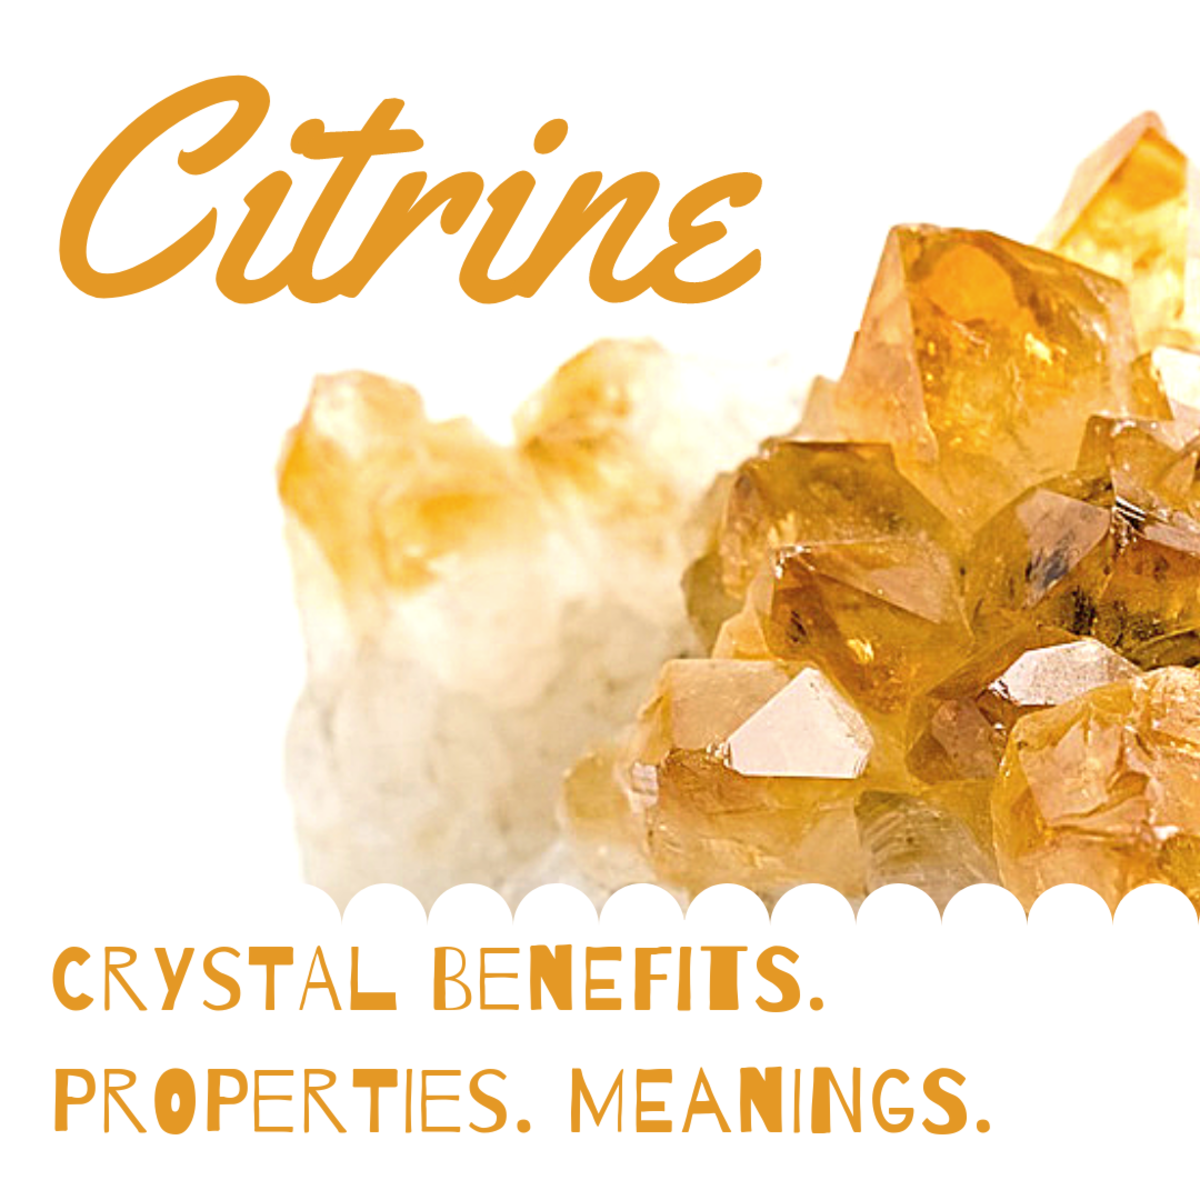 Citrine crystal properties. | Source